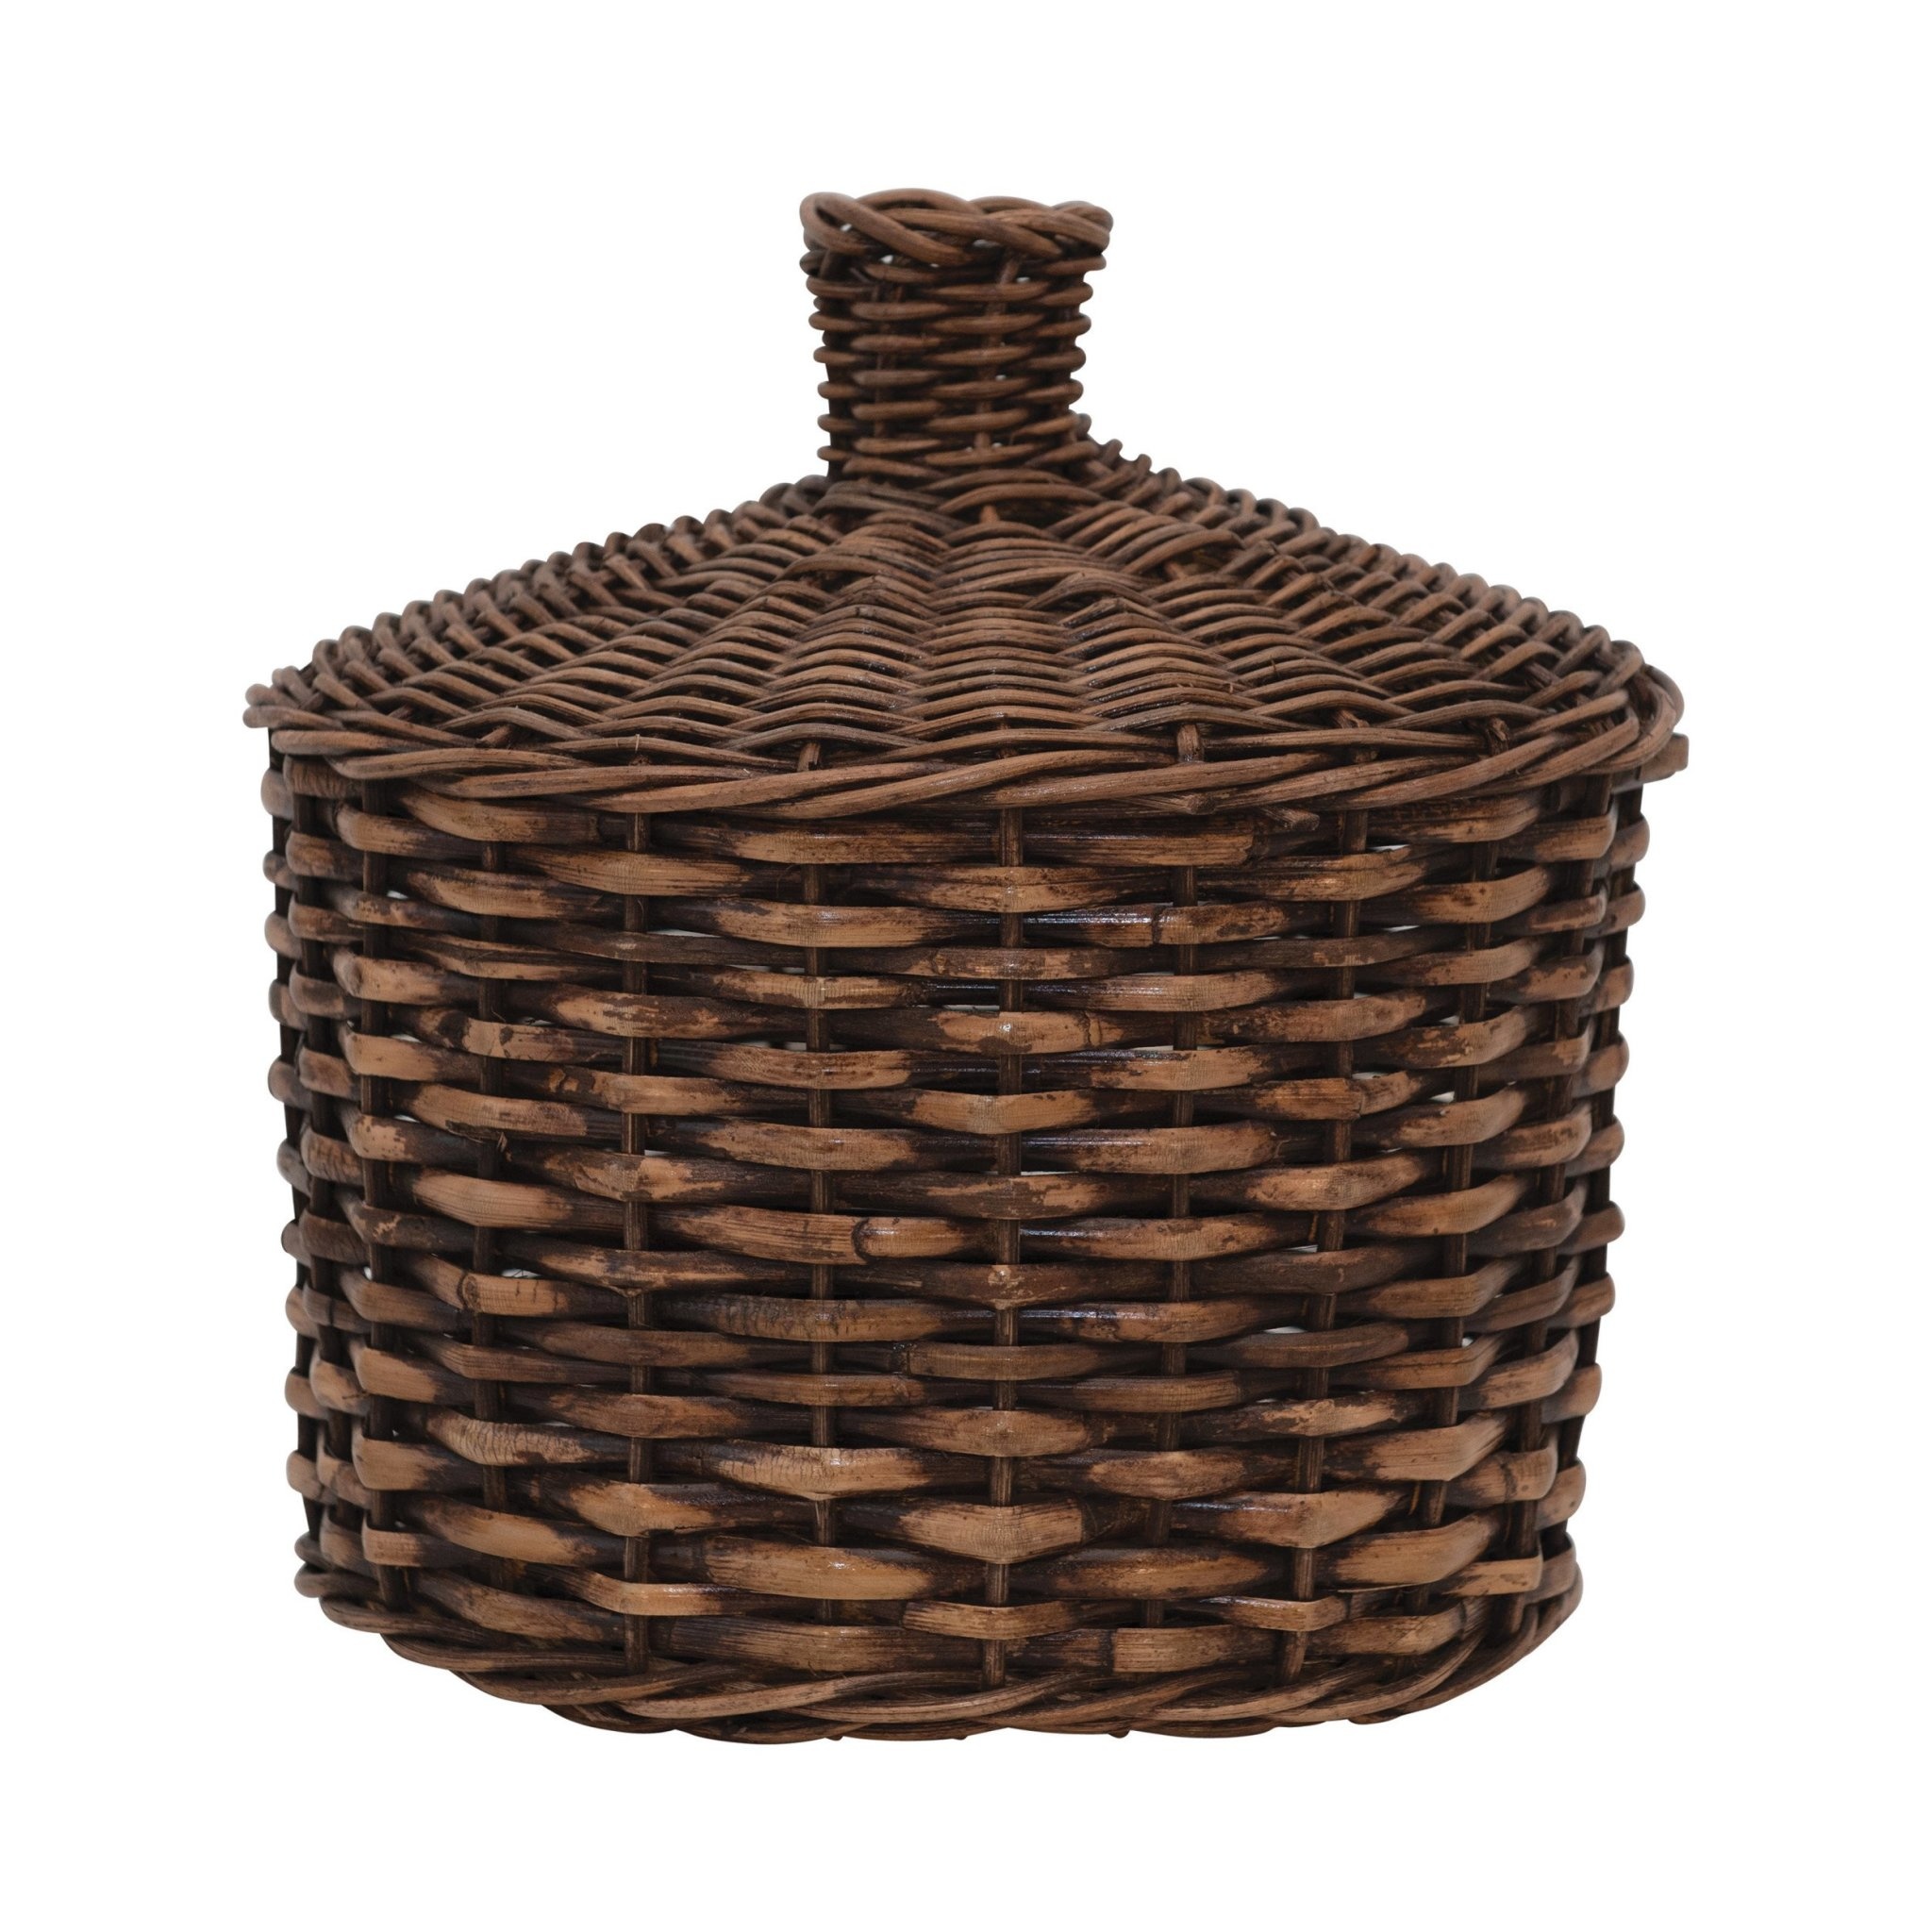 Decorative Wicker and Rattan Basket 15"x27.5"